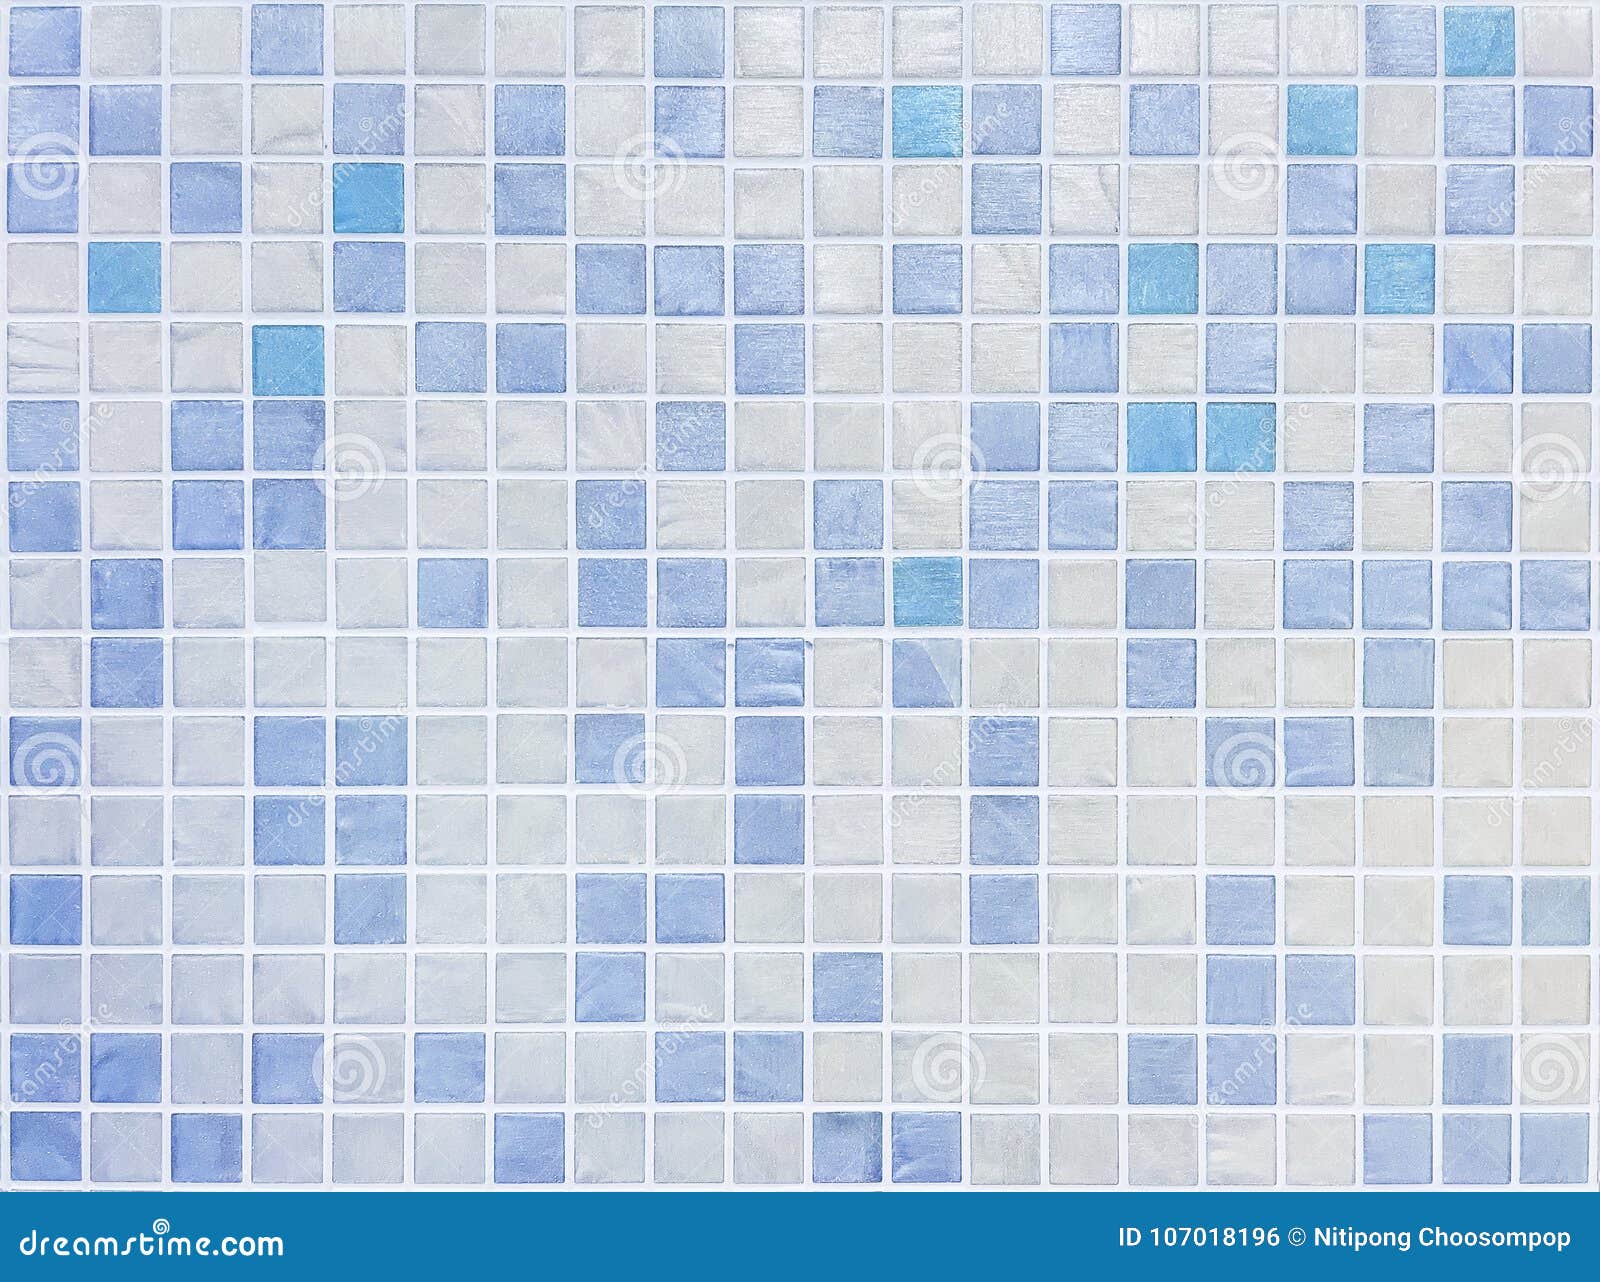 Bathroom Tiles Texture